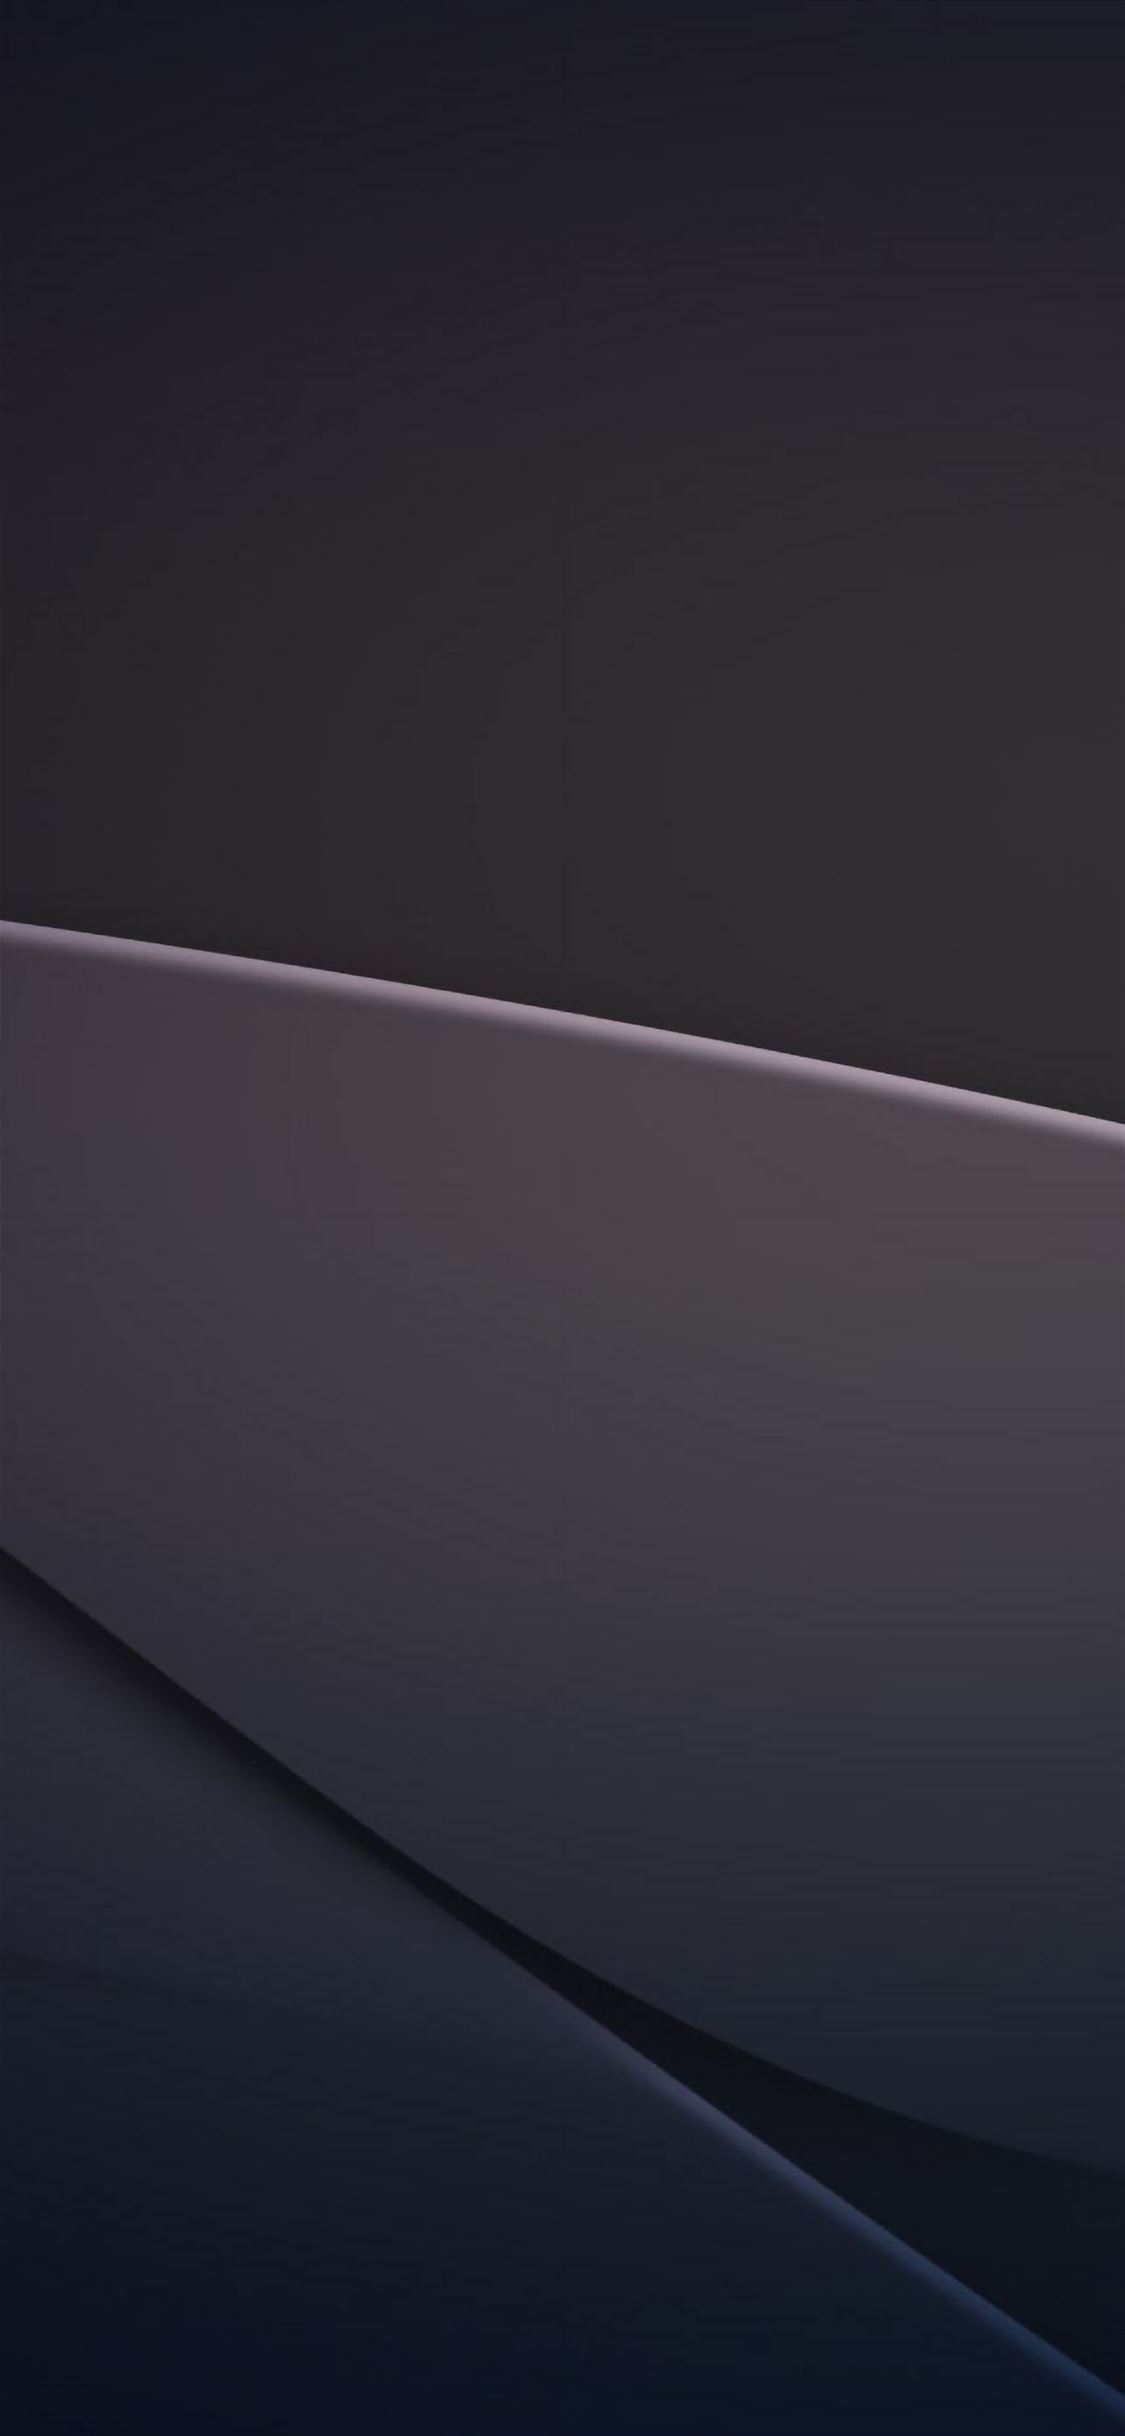 Metallic Curves iPhone wallpaper 